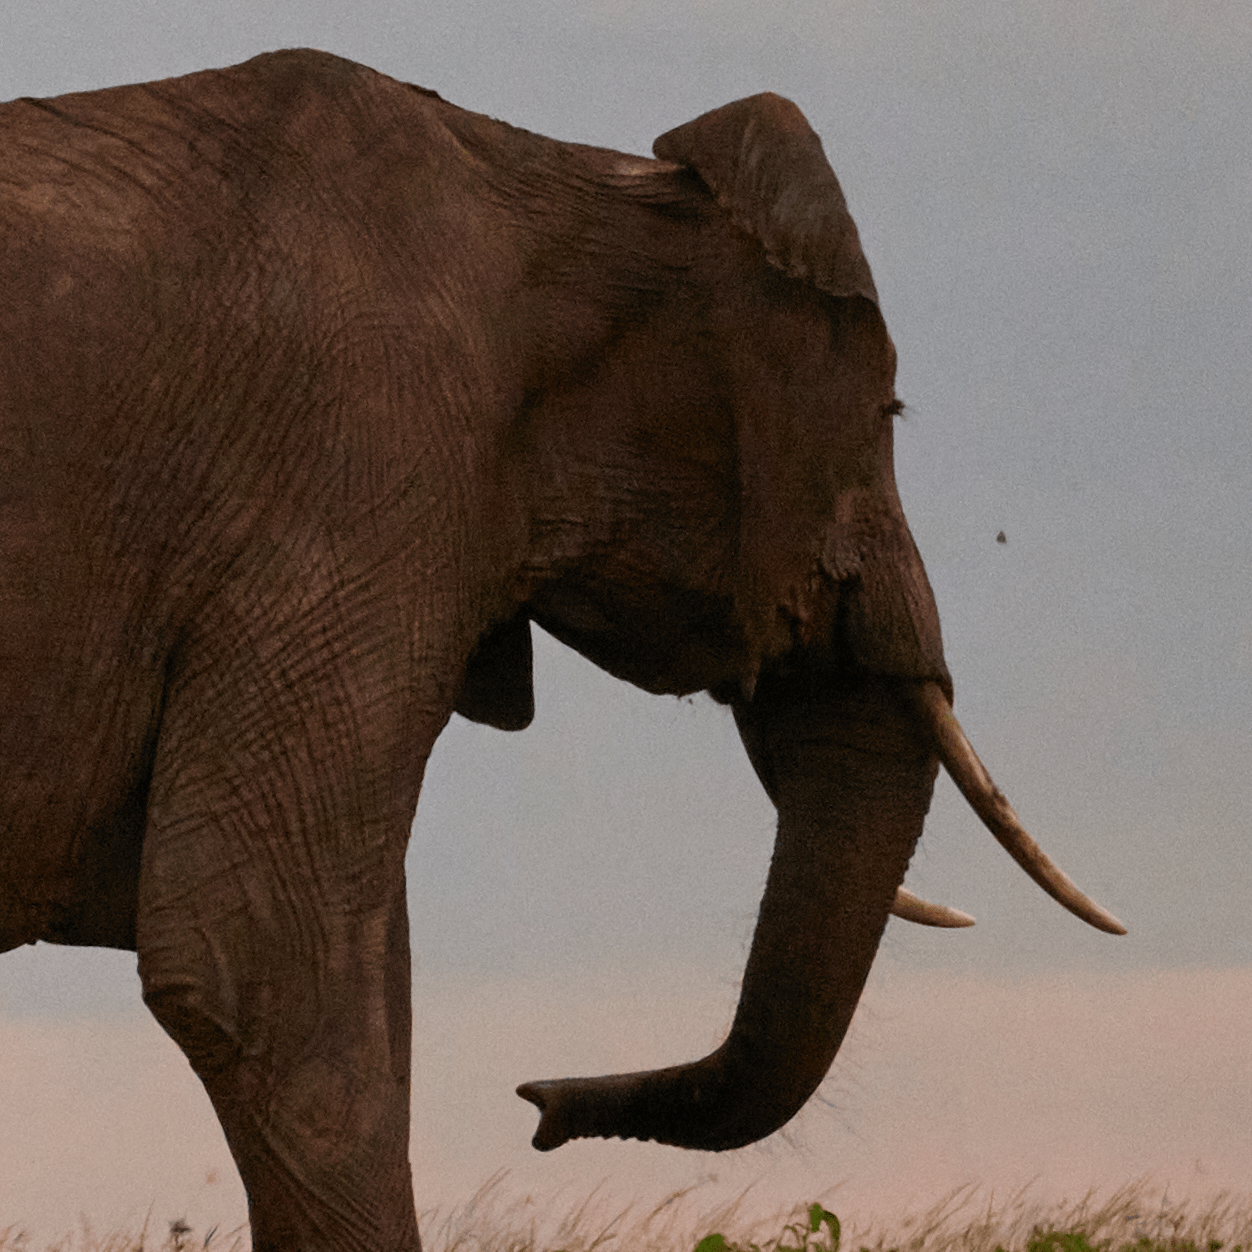 An elephant leading a smaller elephant at dawn.